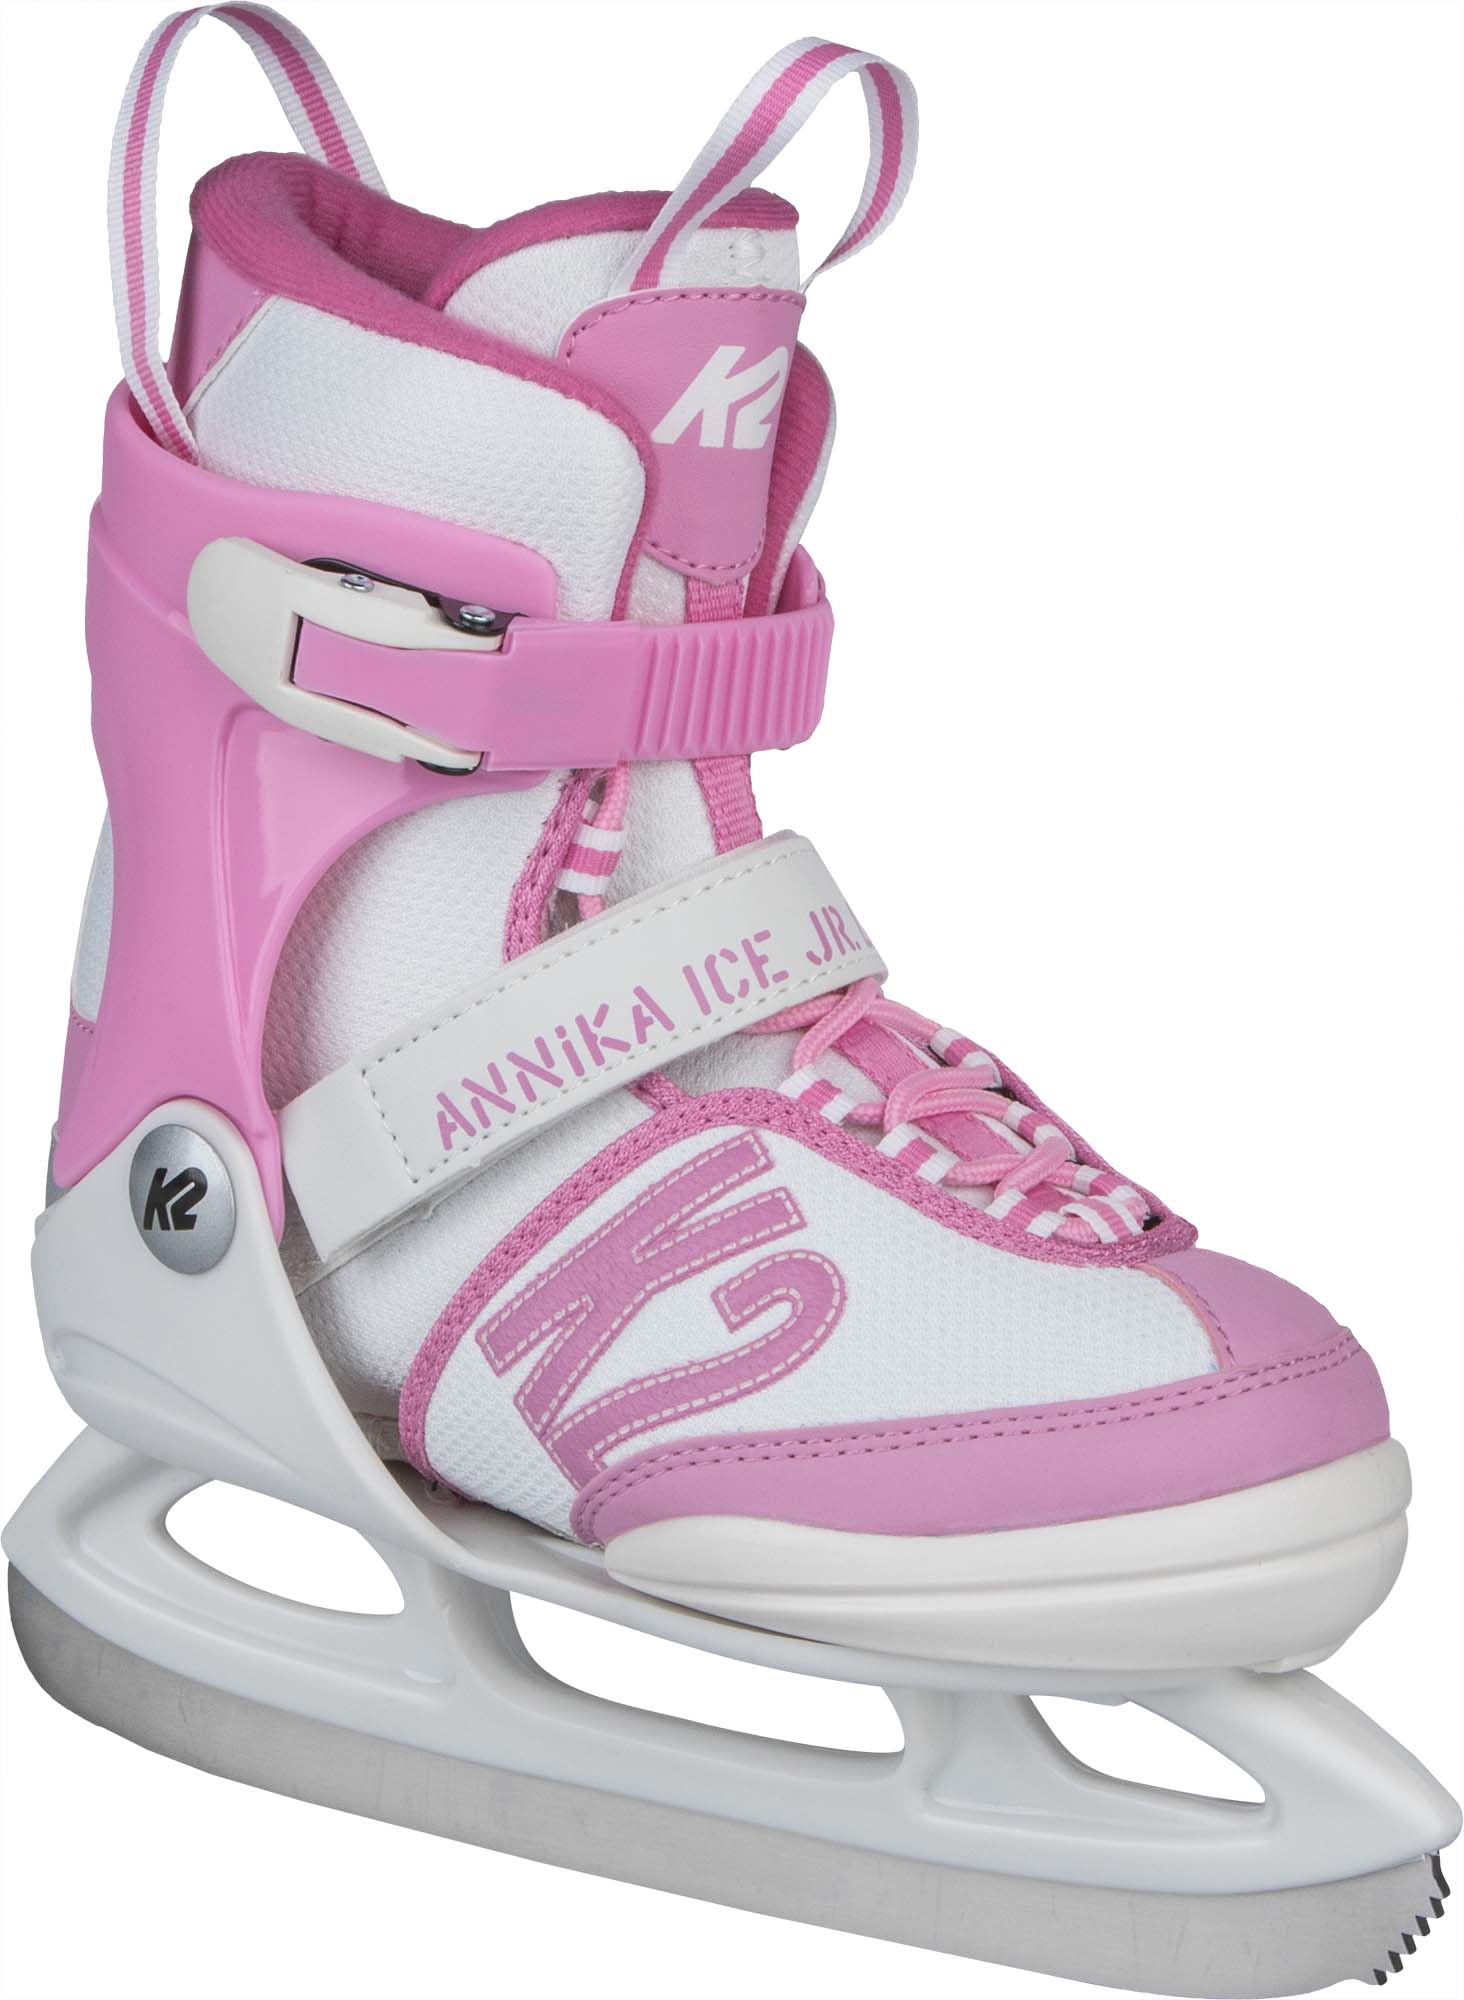 Girls’ ice skates